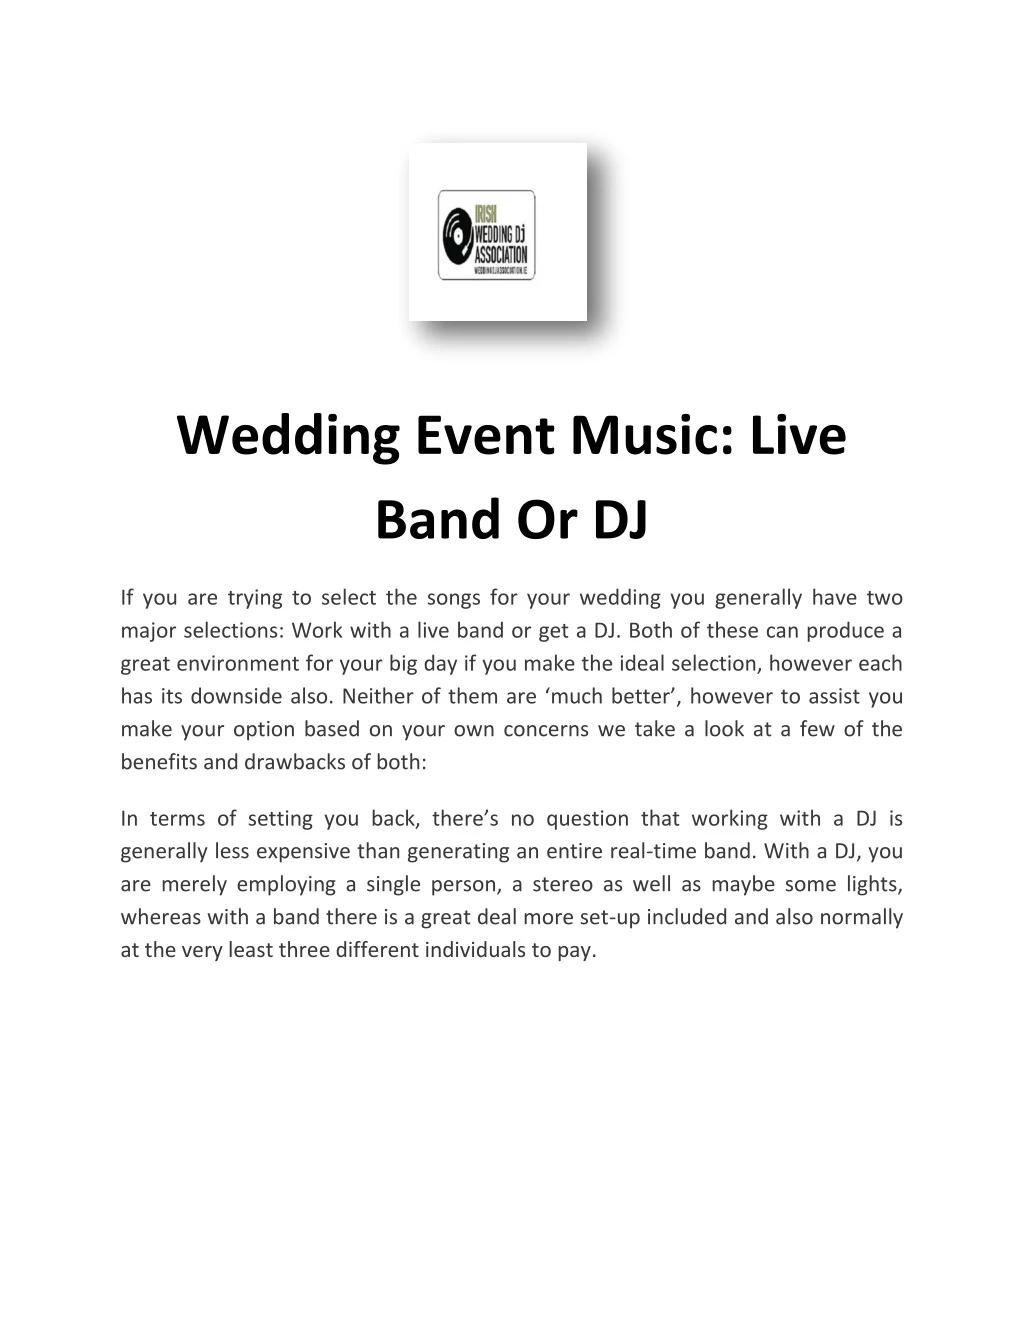 wedding event music live band or dj